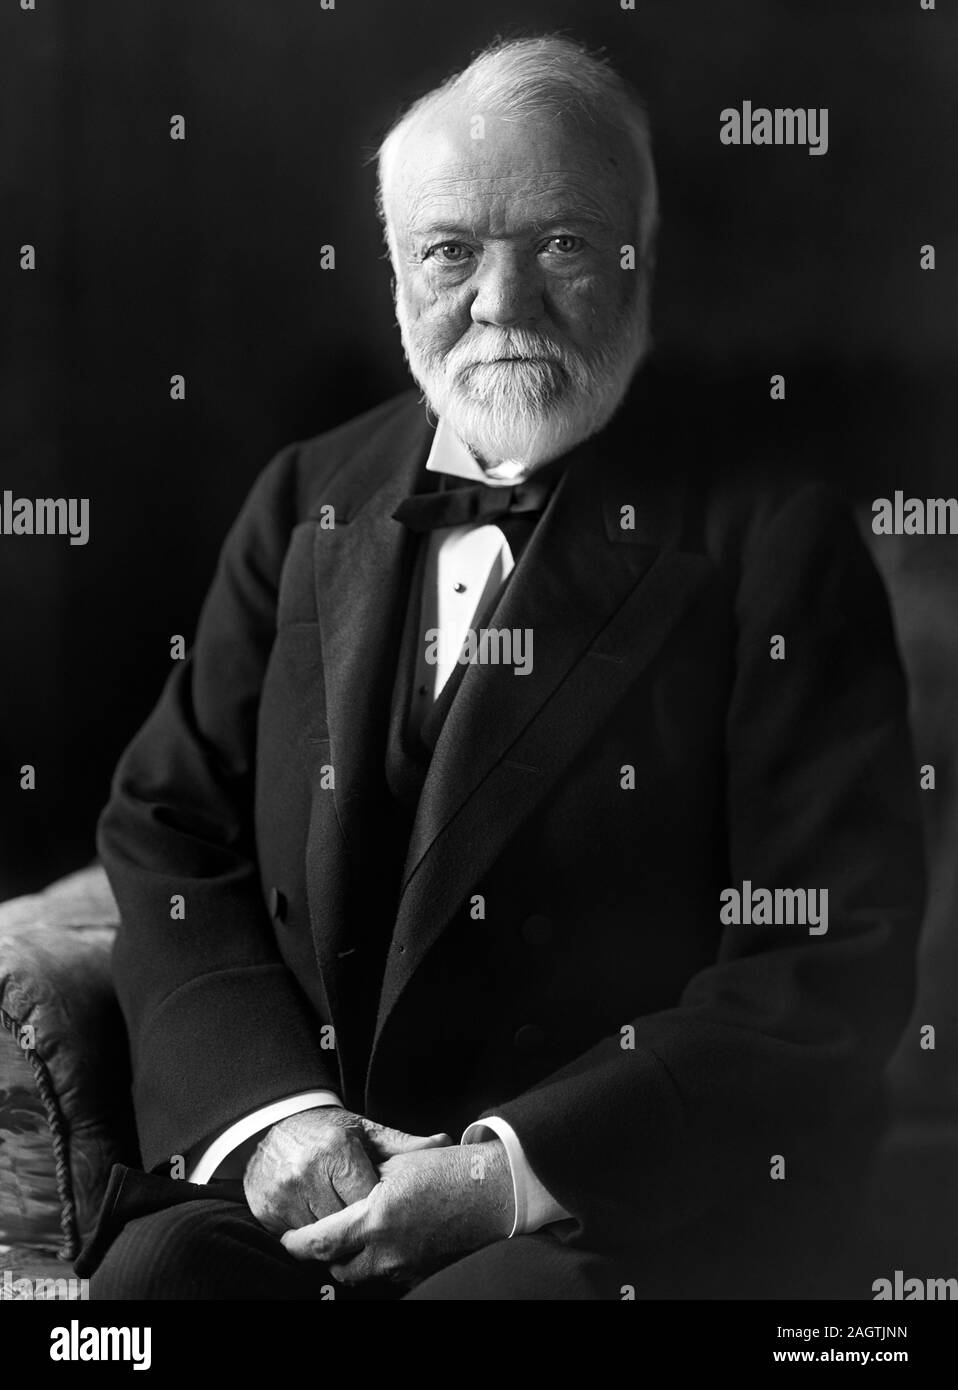 Vintage portrait photo of Scottish-American industrialist and philanthropist Andrew Carnegie (1835 – 1919). Photo circa 1910 by Harris & Ewing. Stock Photo